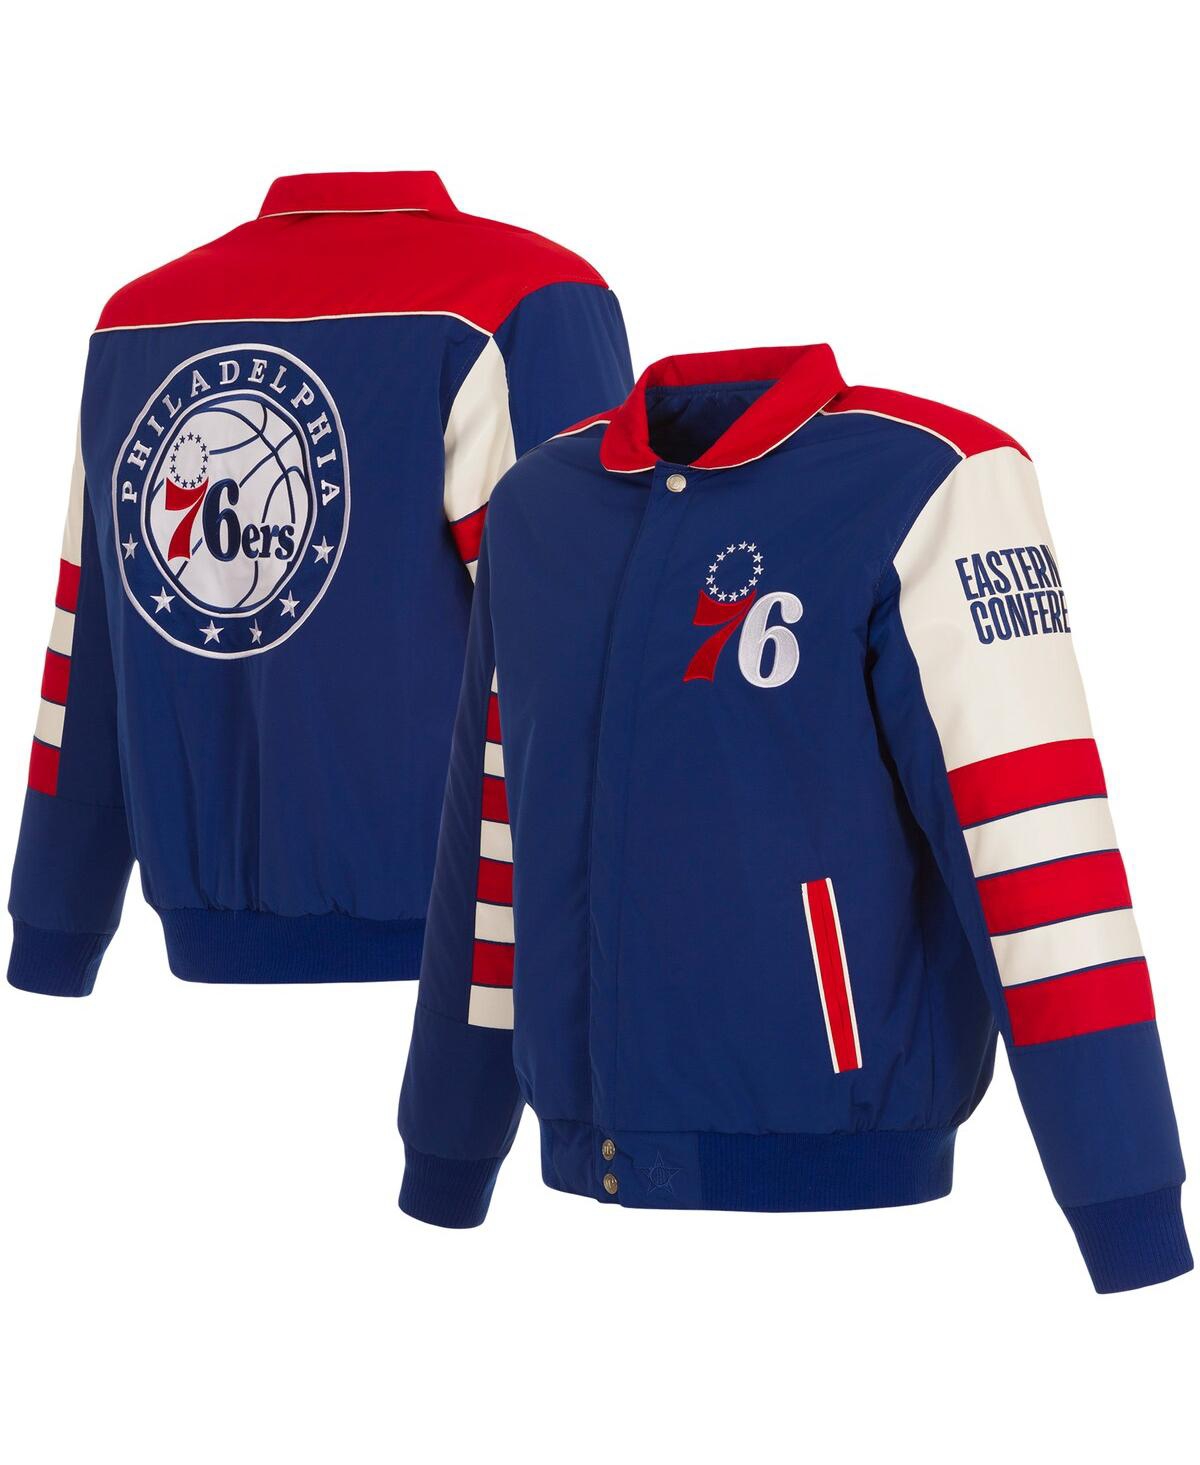 Men's Jh Design Royal Philadelphia 76ers Stripe Colorblock Nylon Reversible Full-Snap Jacket - Royal